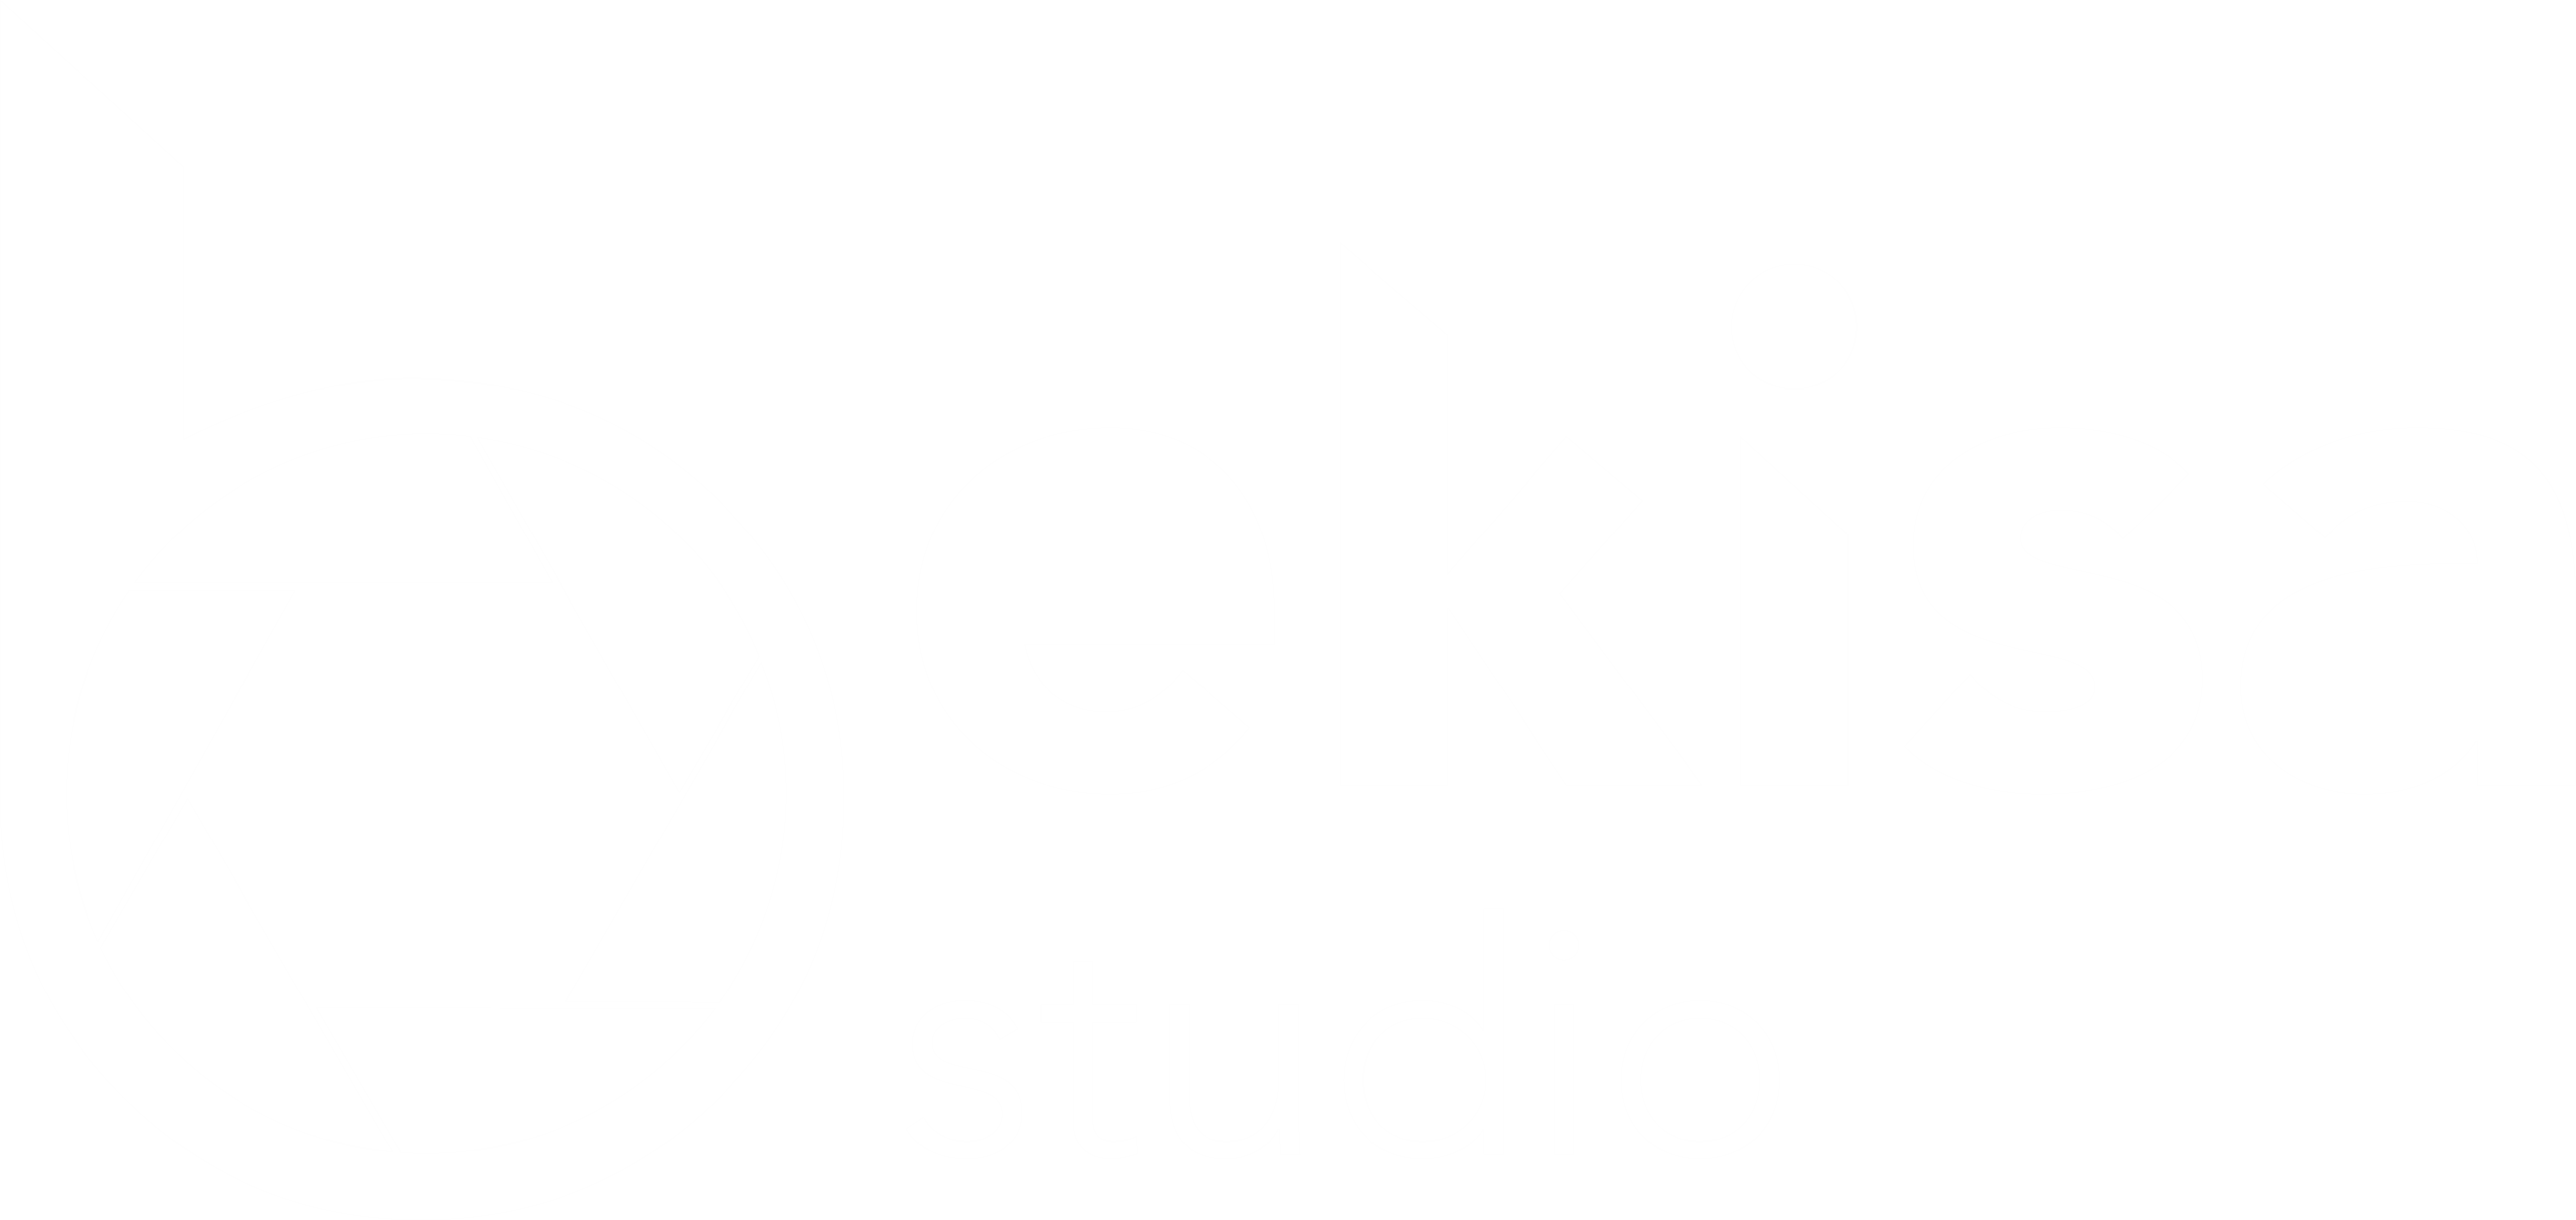 Bekisa Studio – Agência de Publicidade , Marketing, Web Design, Graphic Design